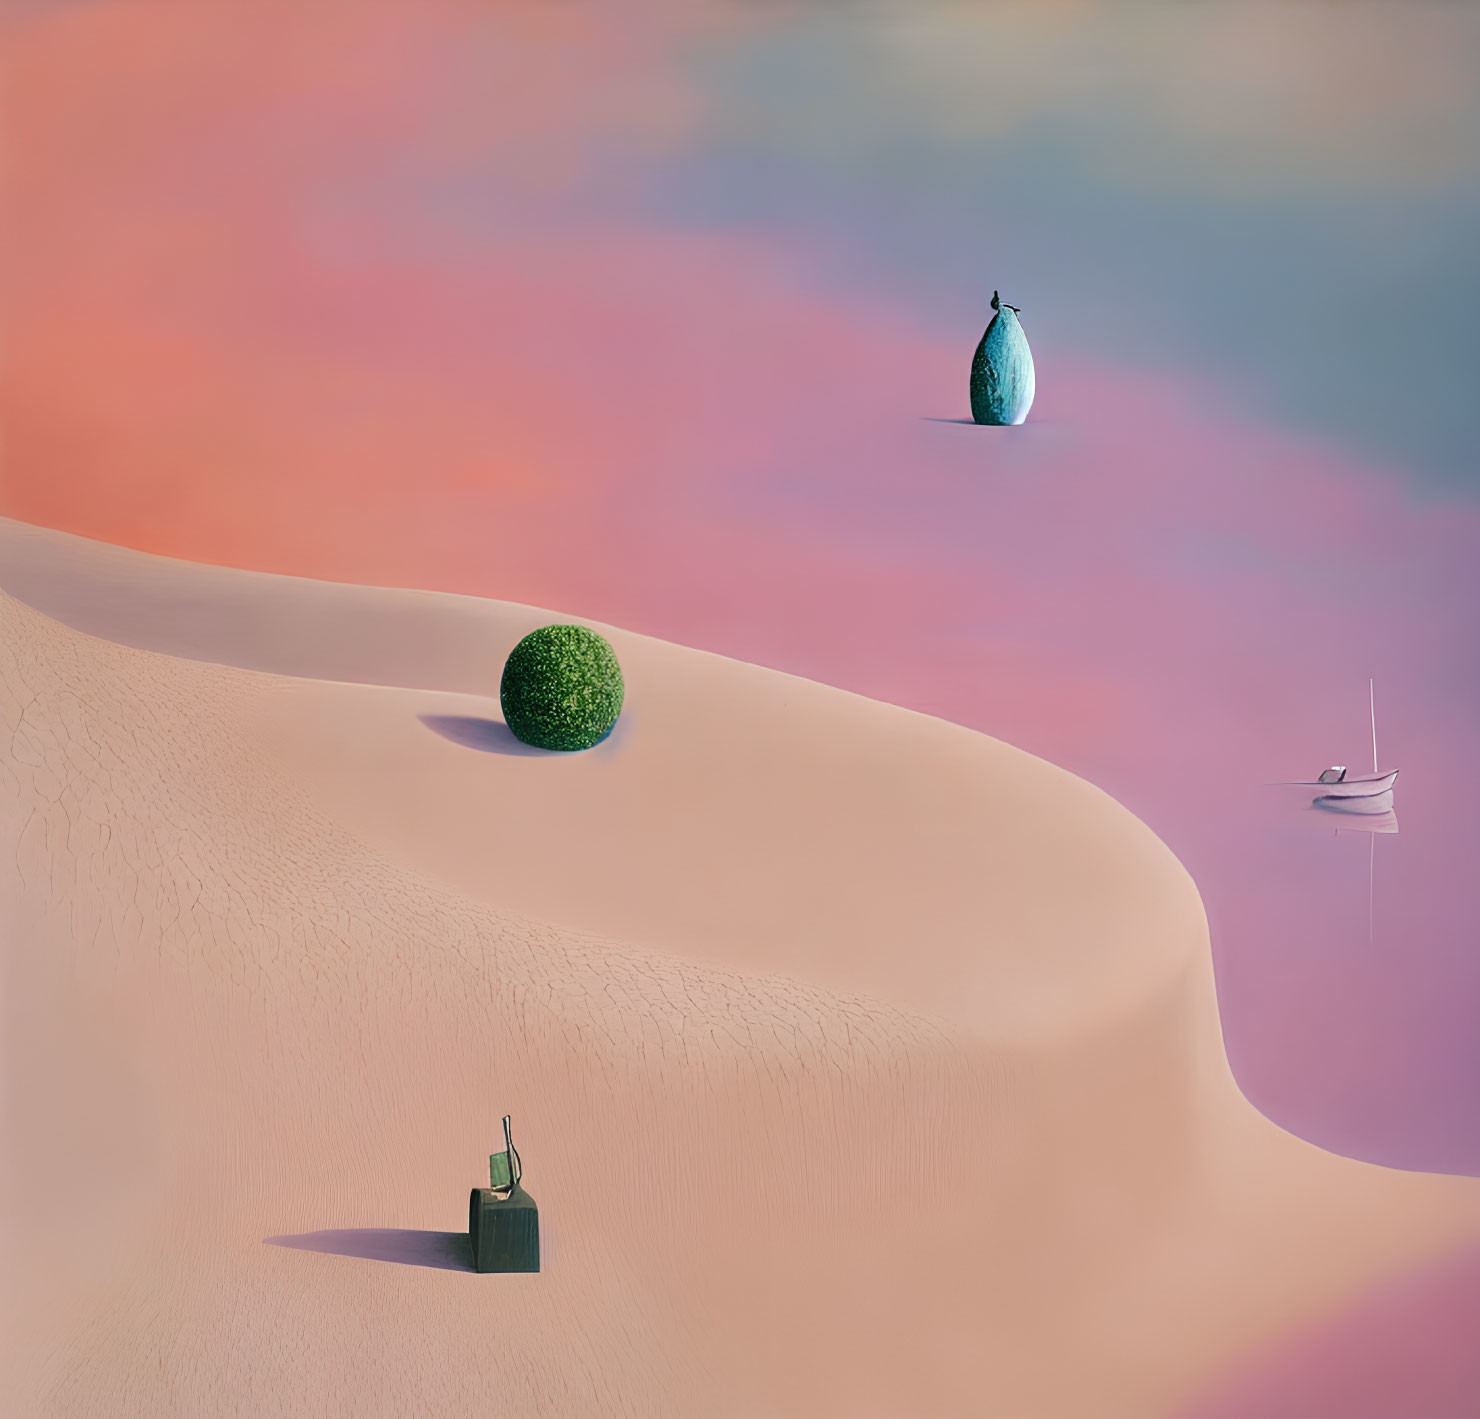 Surreal landscape with sandy hill, tree, pear, bottle, sailboat under pastel sky